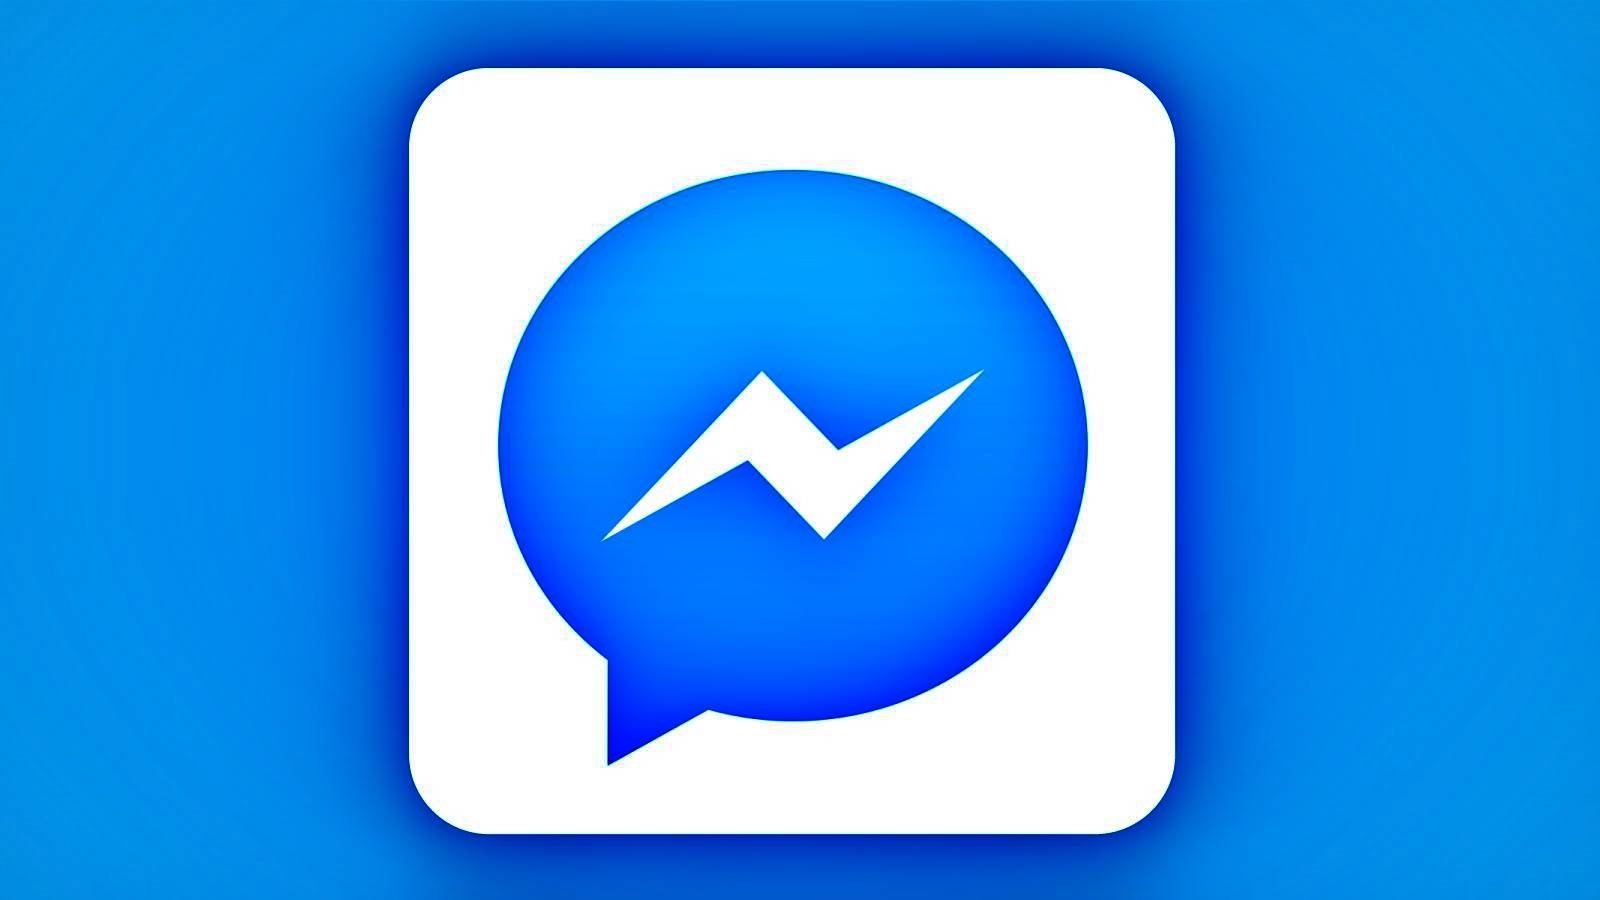 Facebook Messenger Update brings News Changes Phones arrive